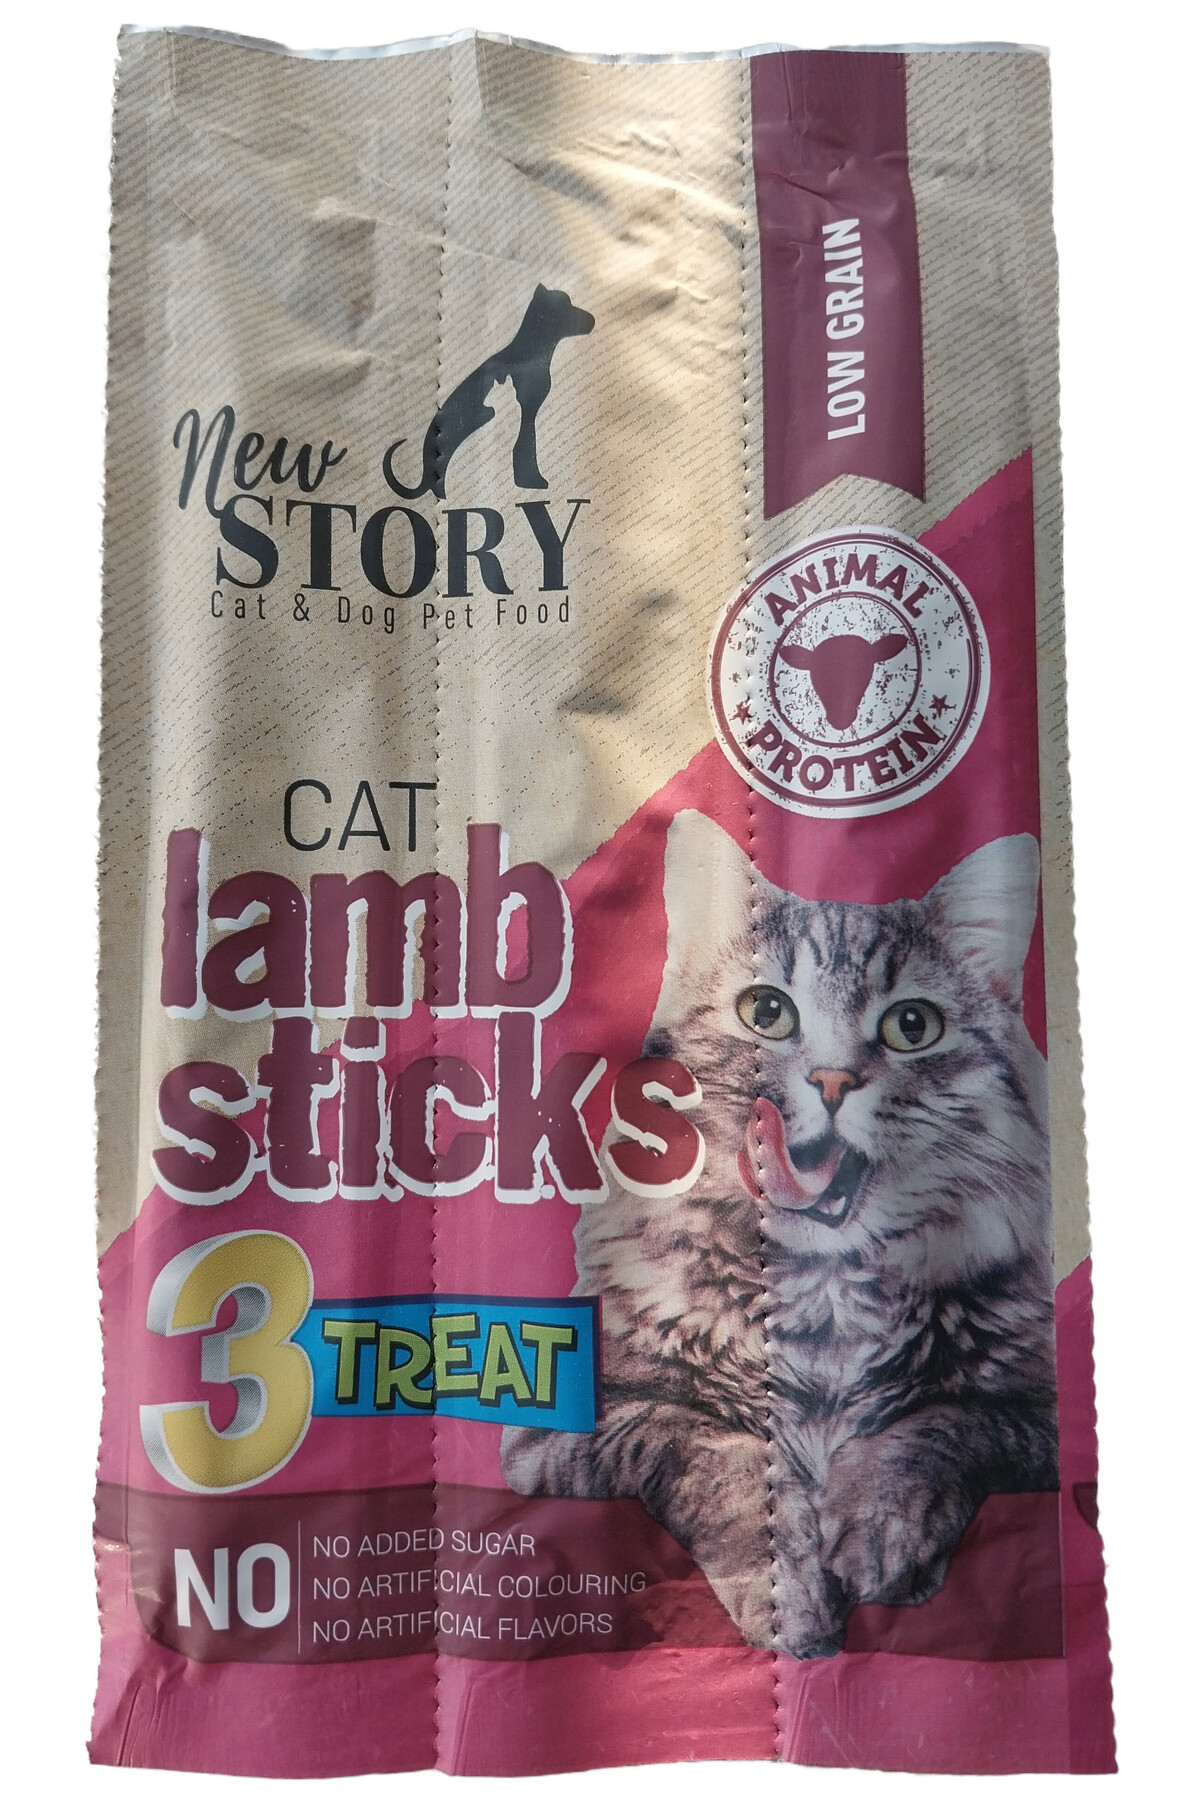 New Story Kuzu Etli 4 adet 3lu Kedi Odul Cubuklari, Cat Lamb Sticks, Motto Krill Sticks